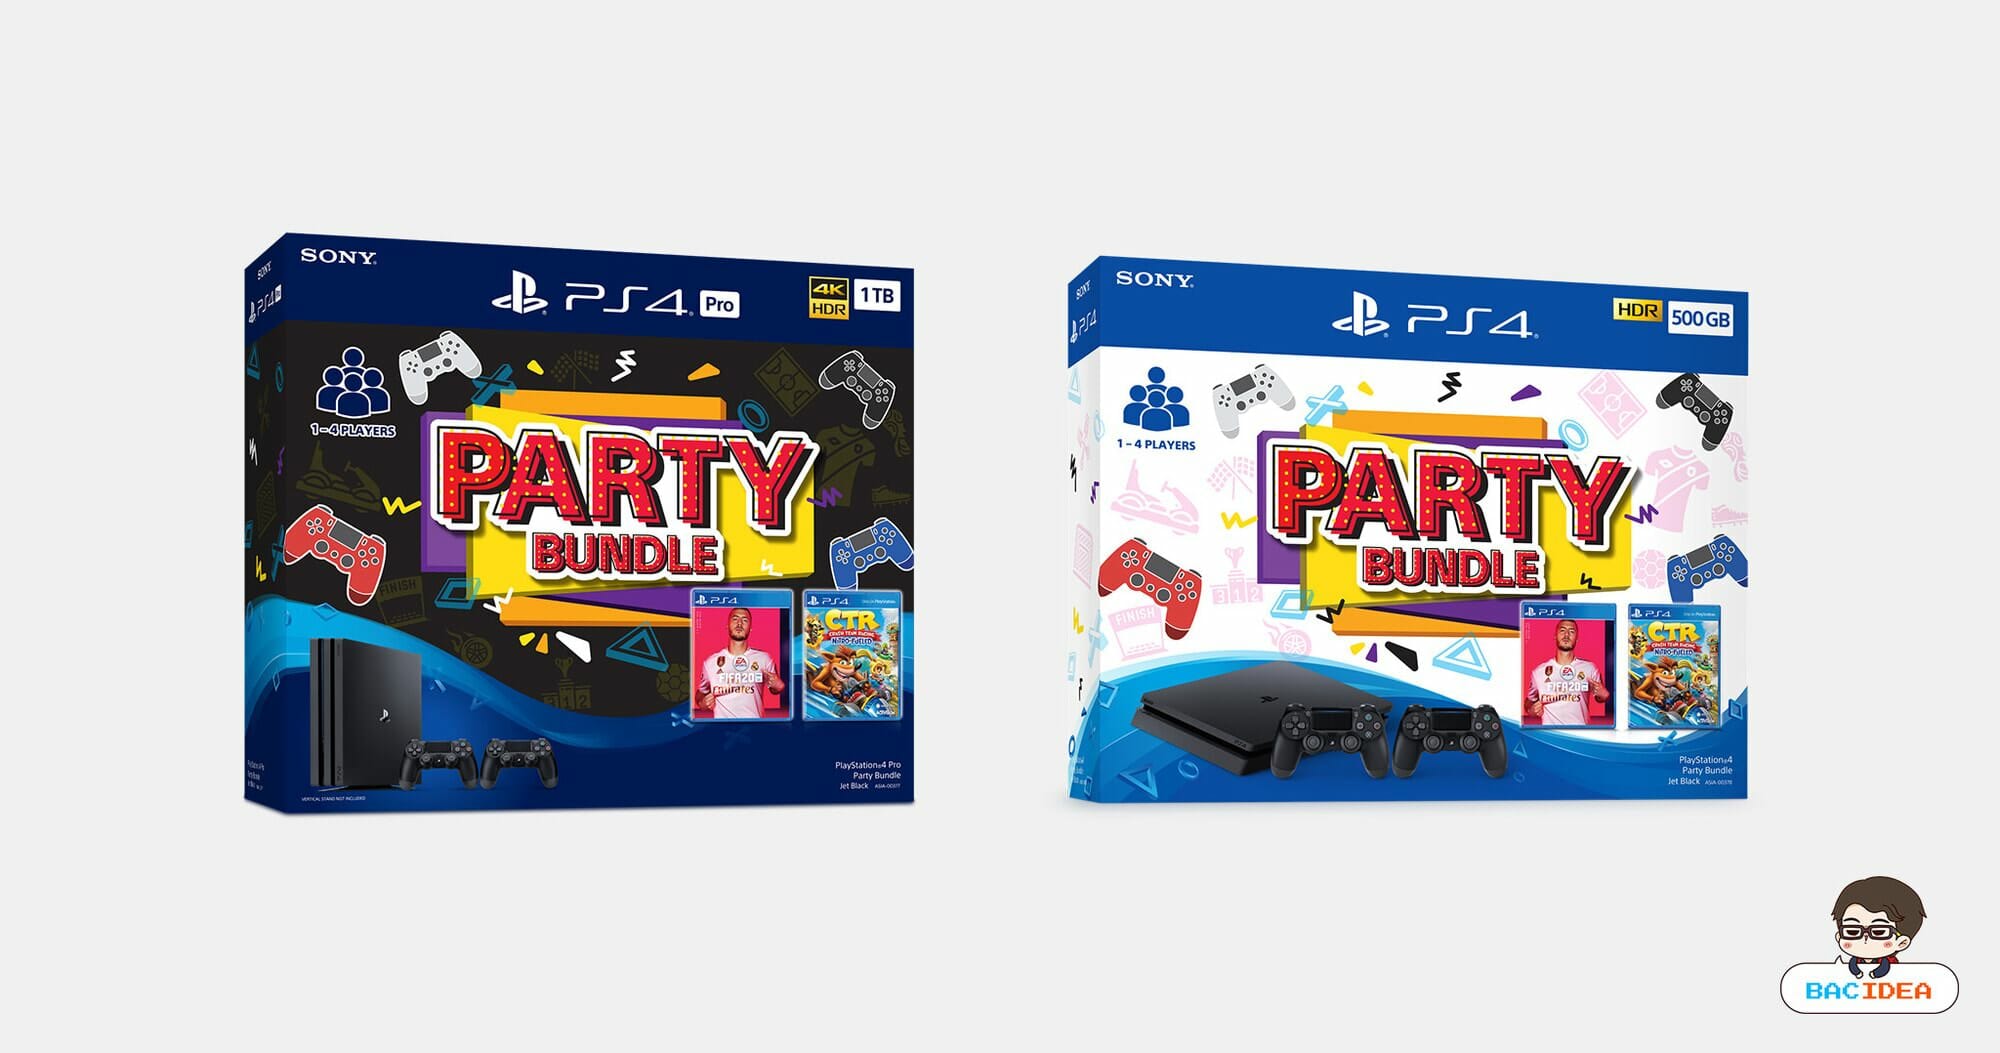 Sony วางจำหน่าย PlayStation 4 Party Bundle ใหม่สองชุด 1